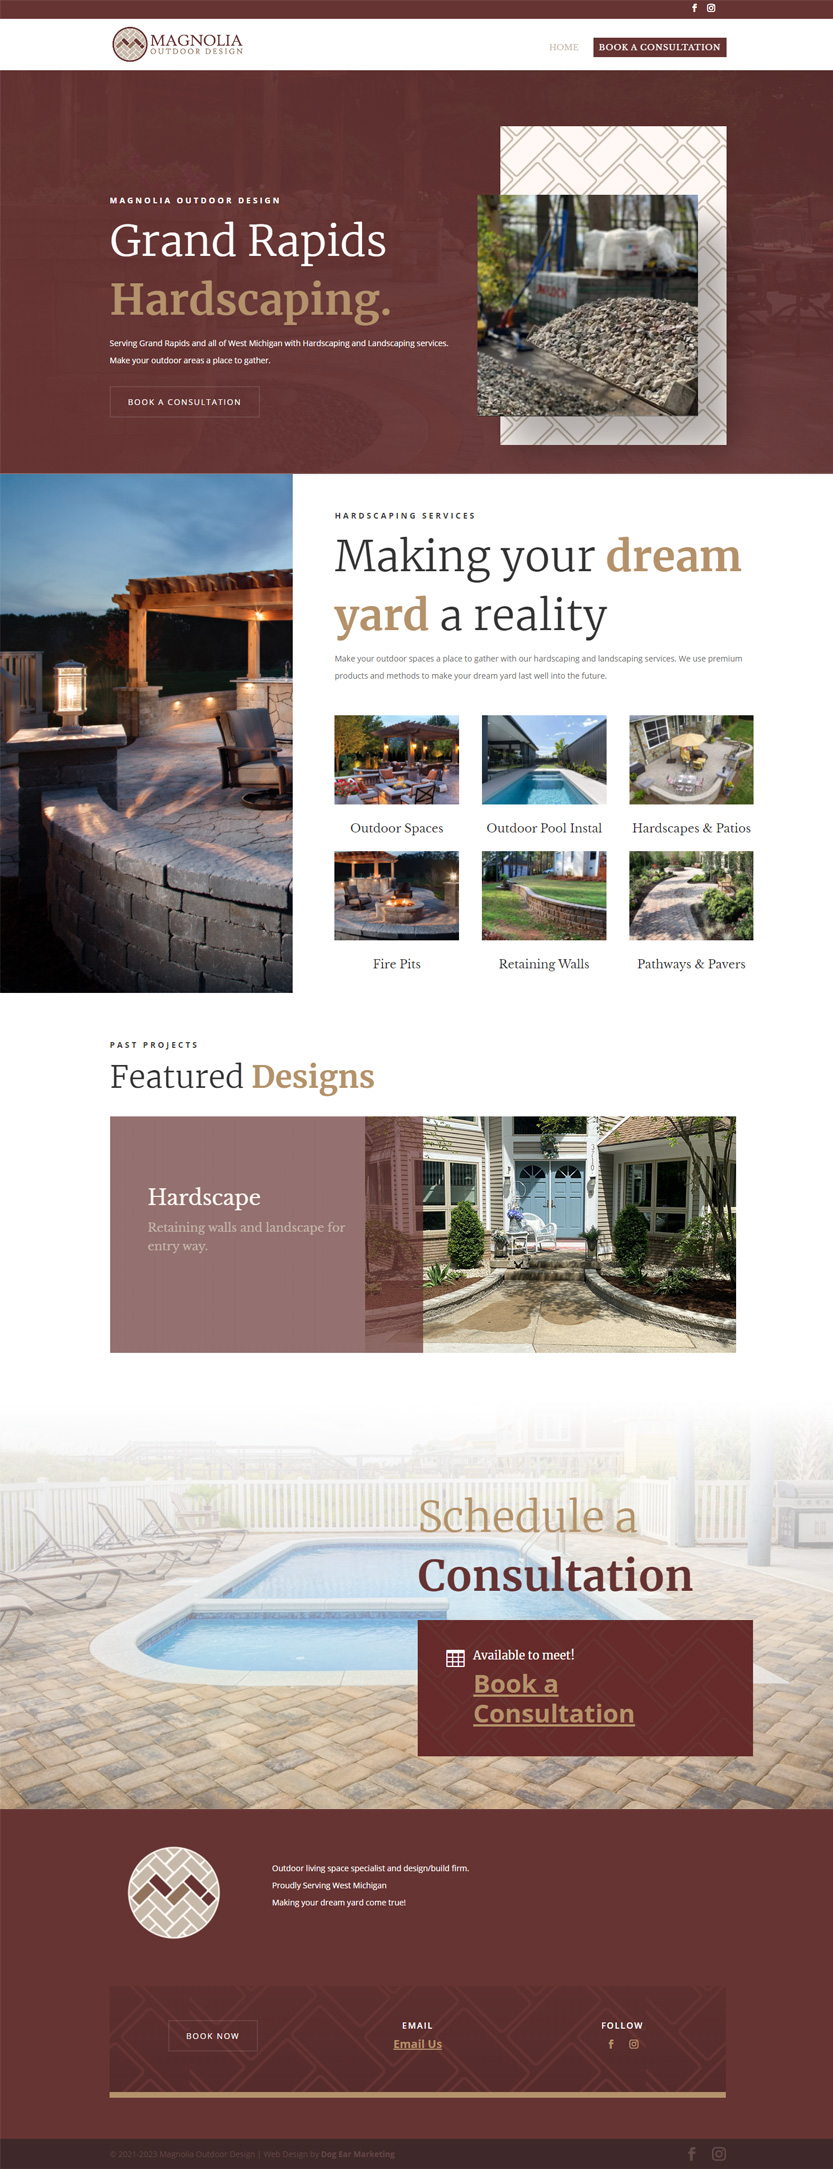 magnolia website design, hosting and development - home page